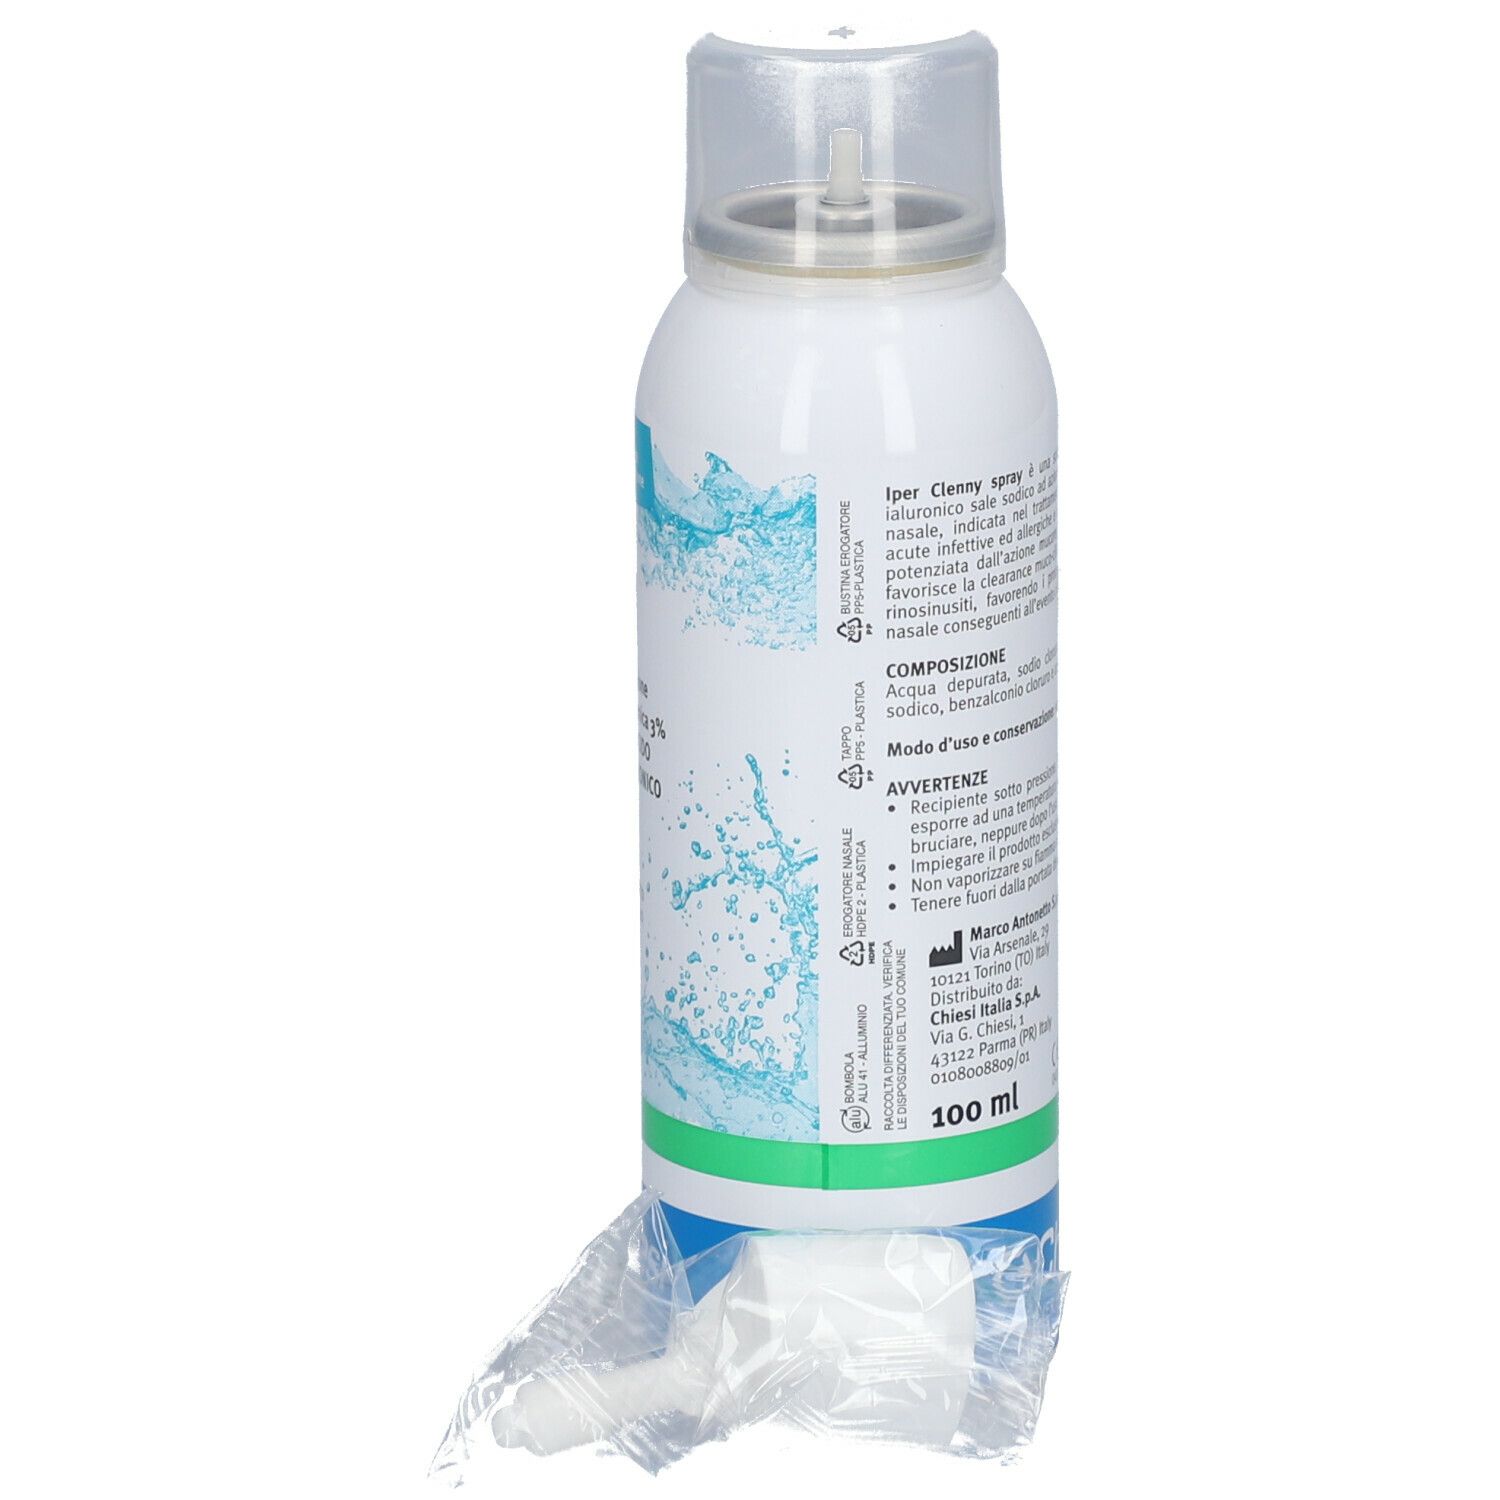 Iper Clenny Spray nasale 100 ml 100 ml